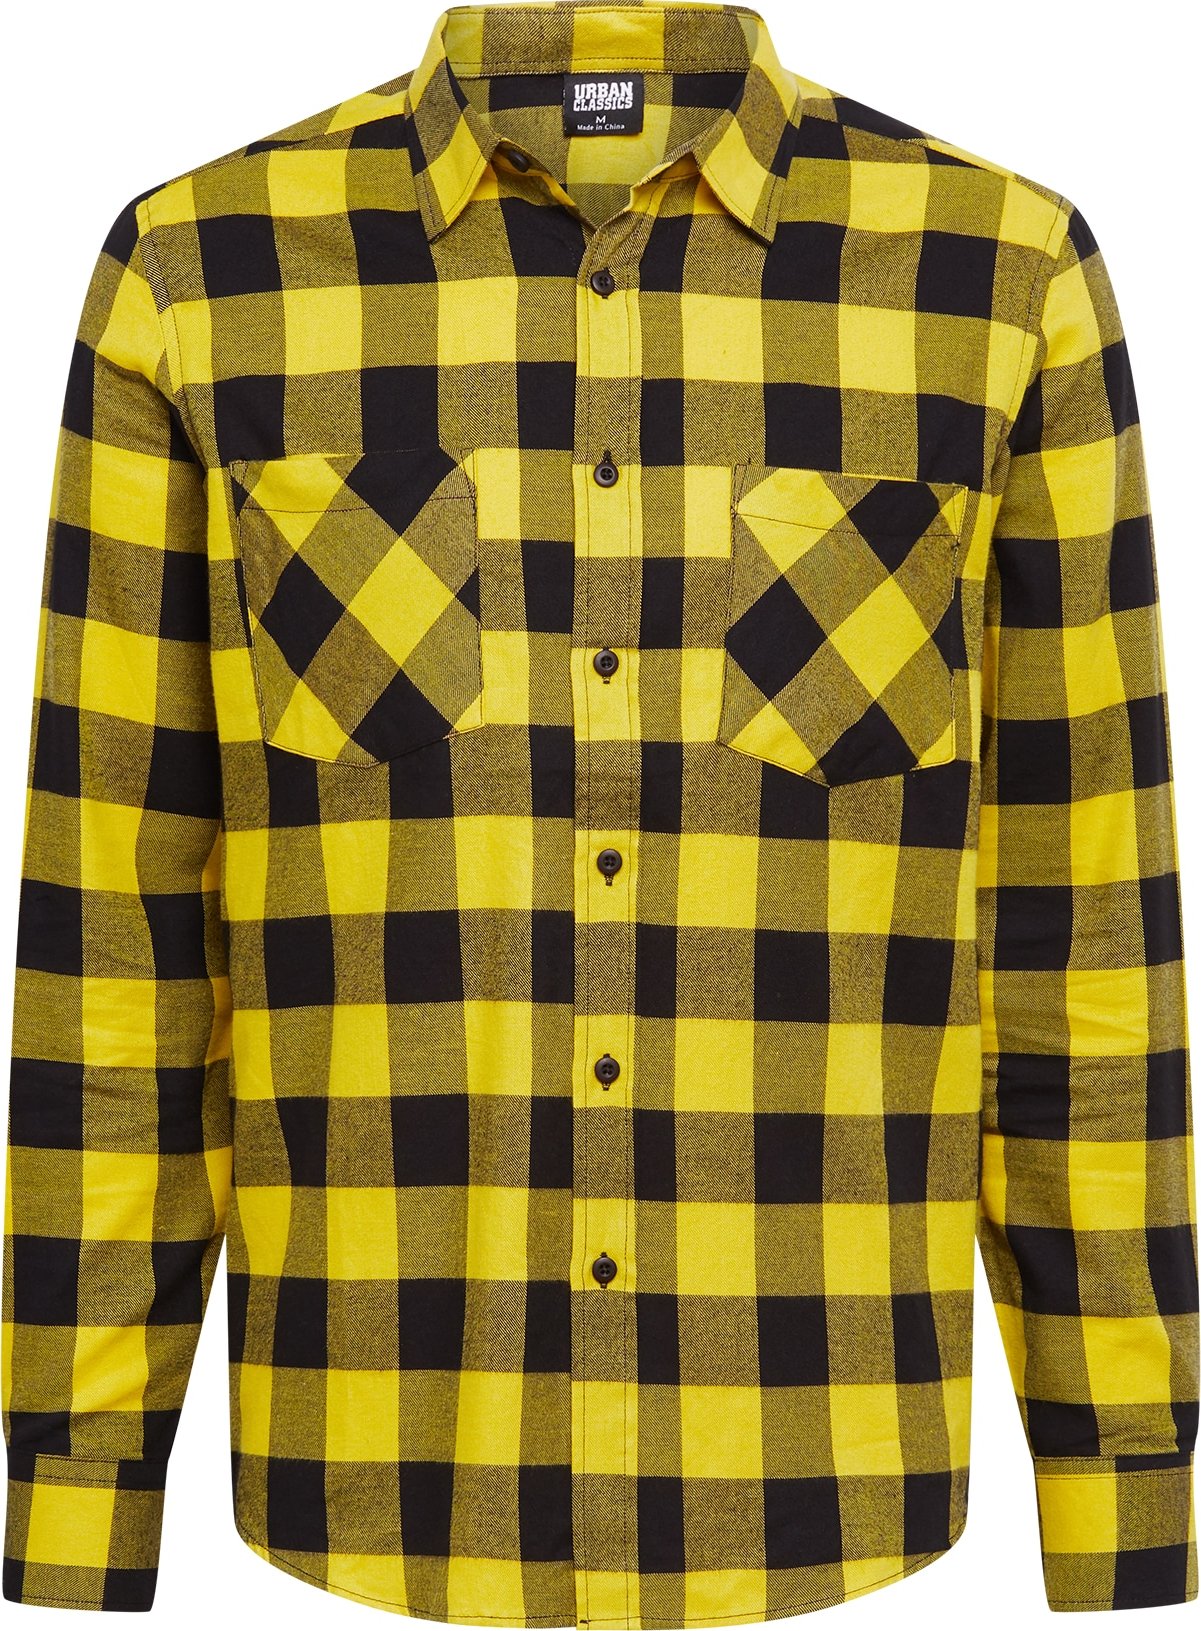 Urban Classics Big & Tall Košile černá / žlutá